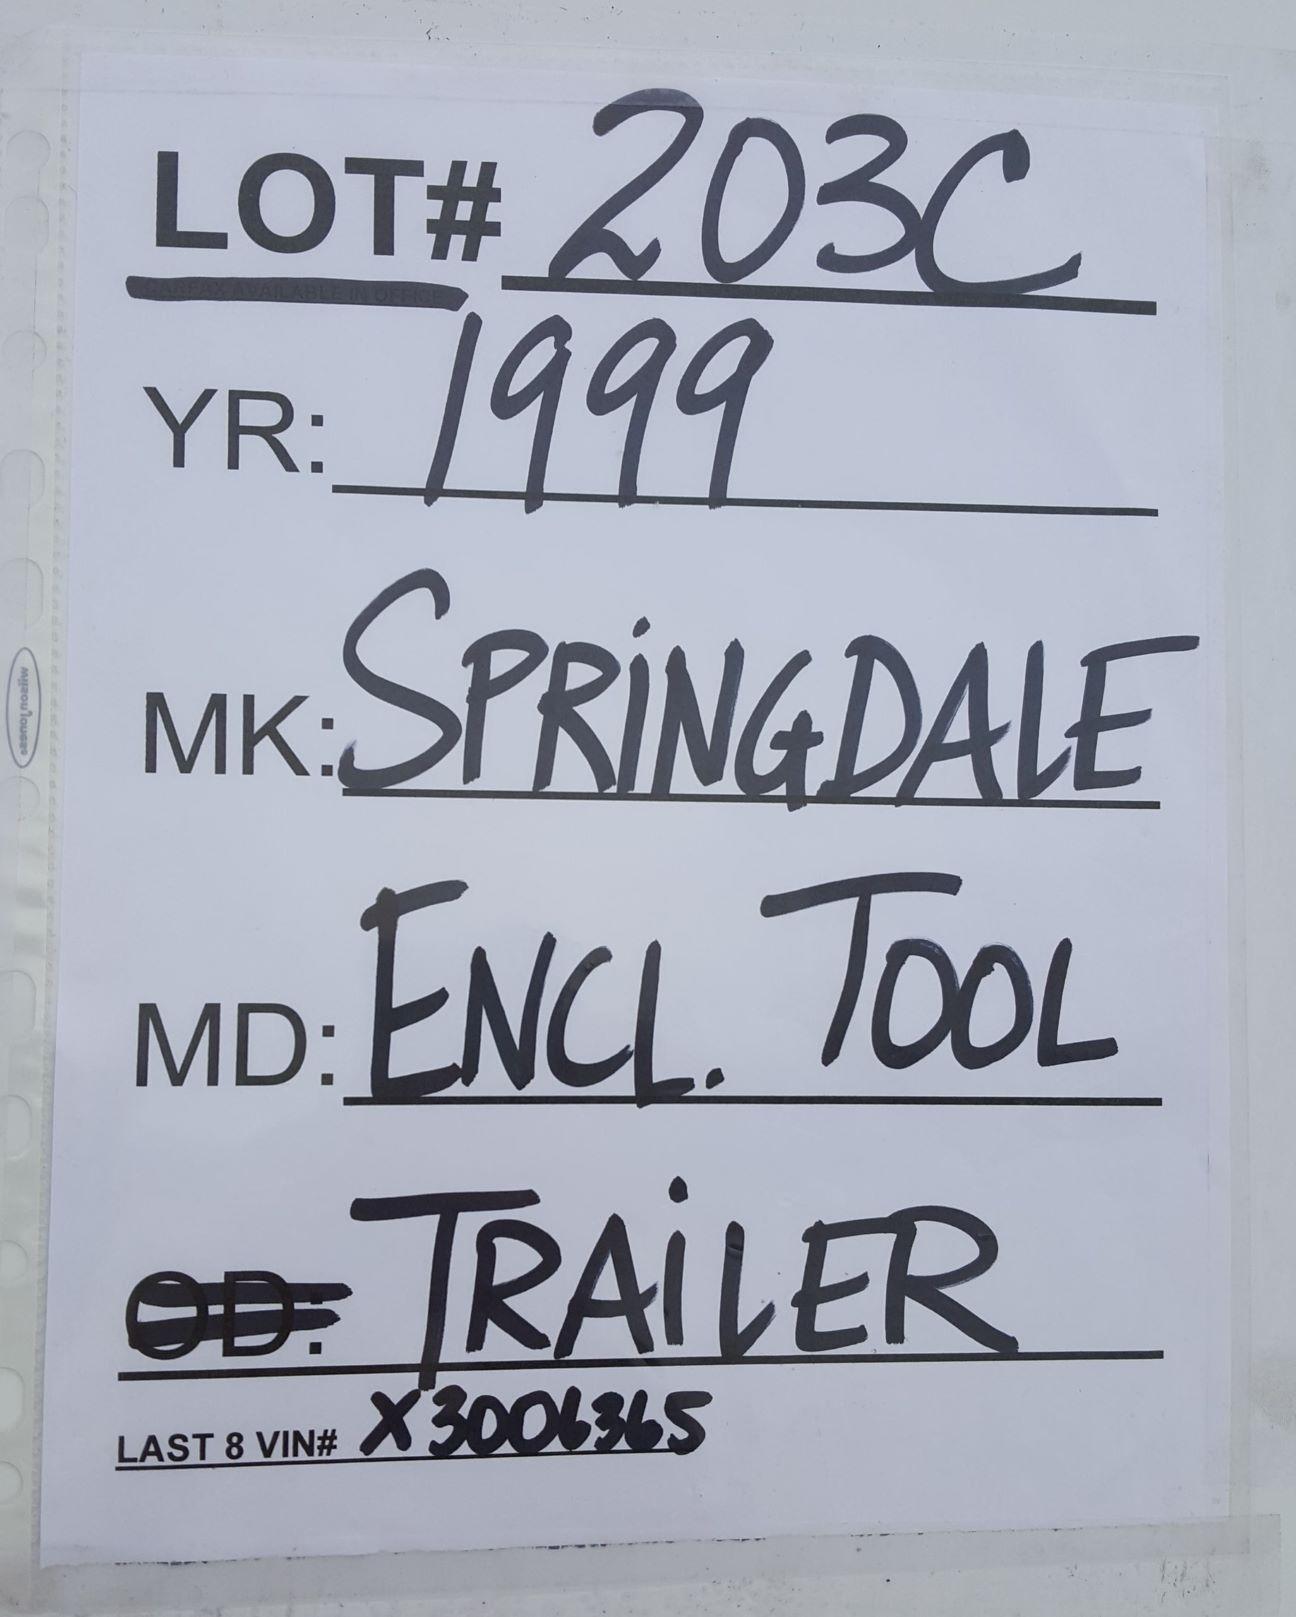 1999 Springdale Enclosed Tool Trailer